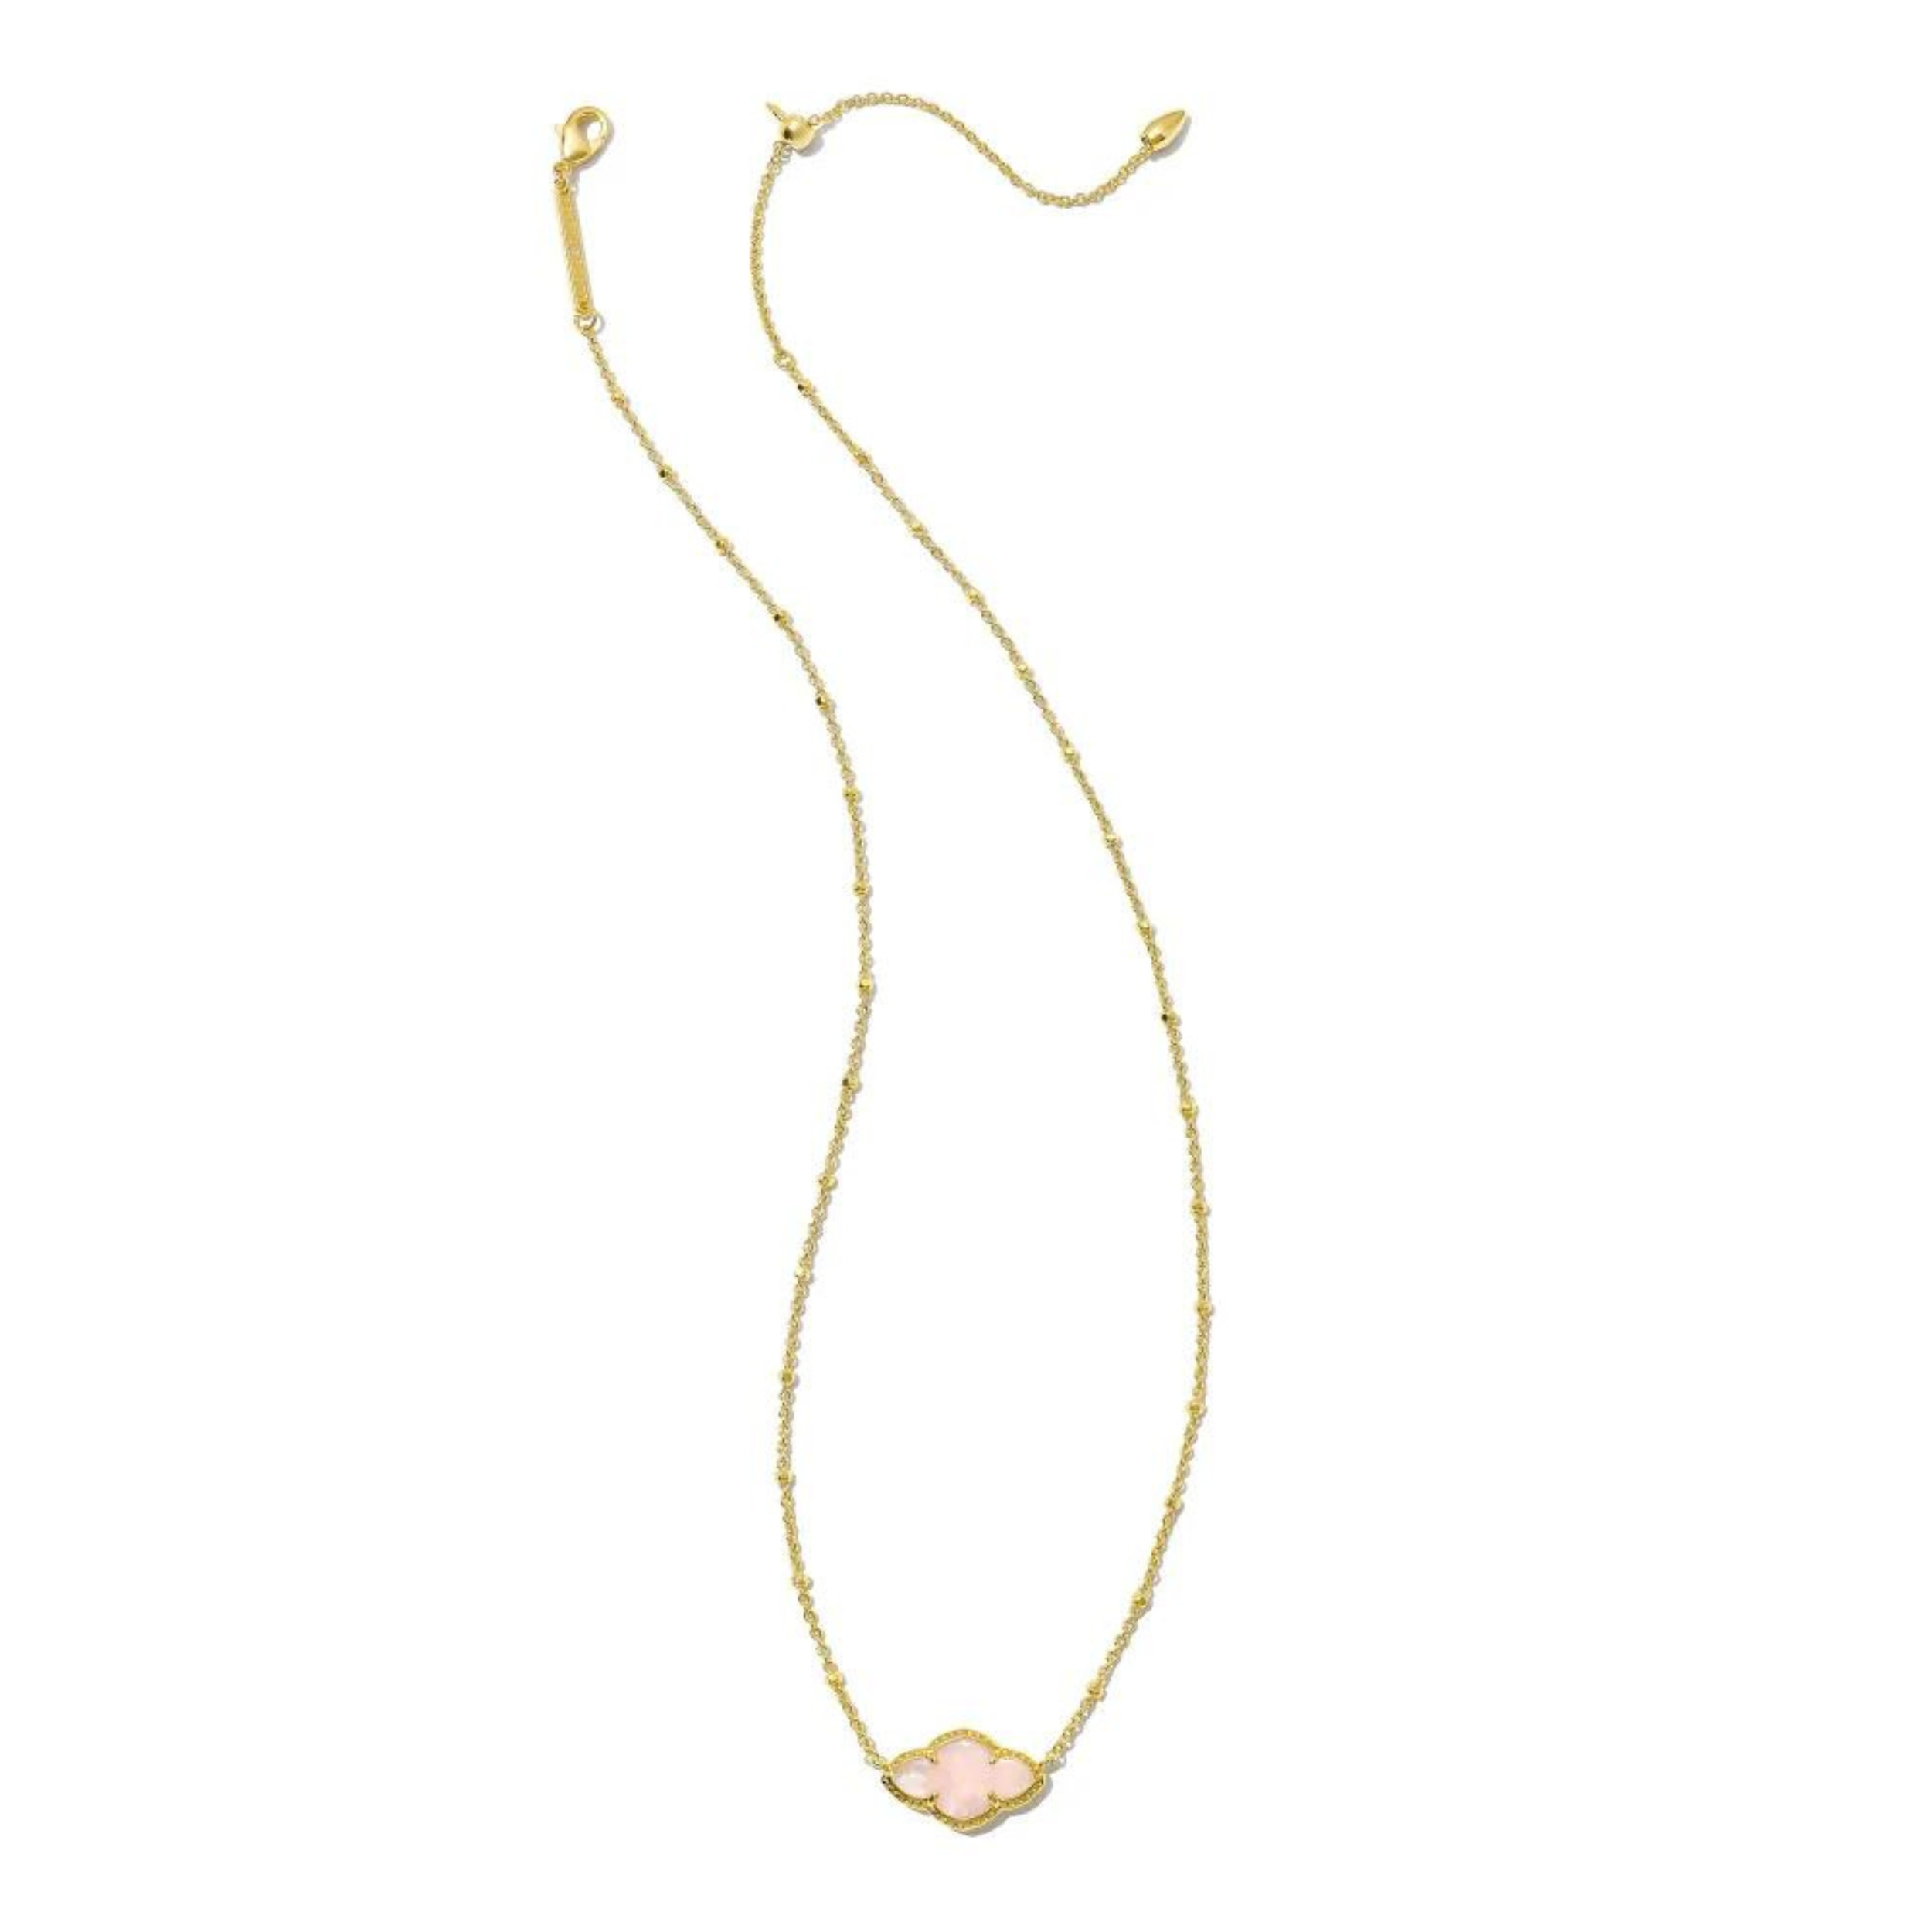 Kendra Scott | Abbie Gold Pendant Necklace in Rose Quartz - Giddy Up Glamour Boutique